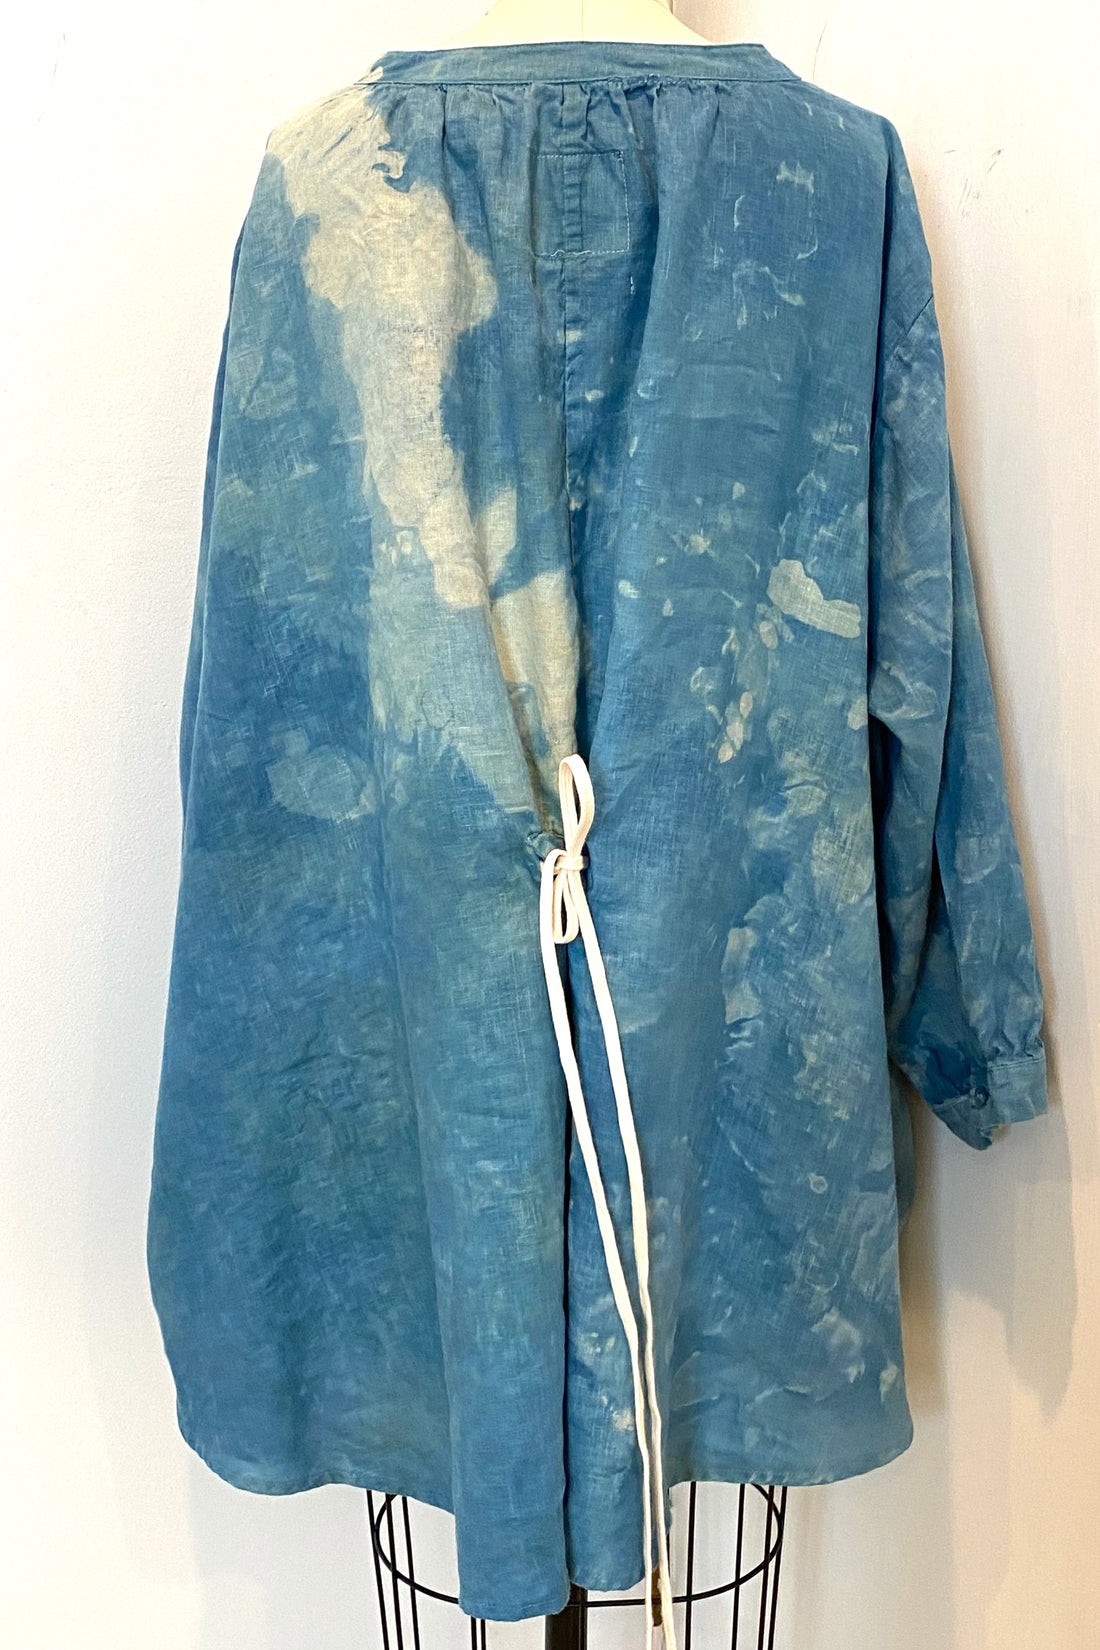 Botanically Dyed Linen Tunic in Blue Size 3